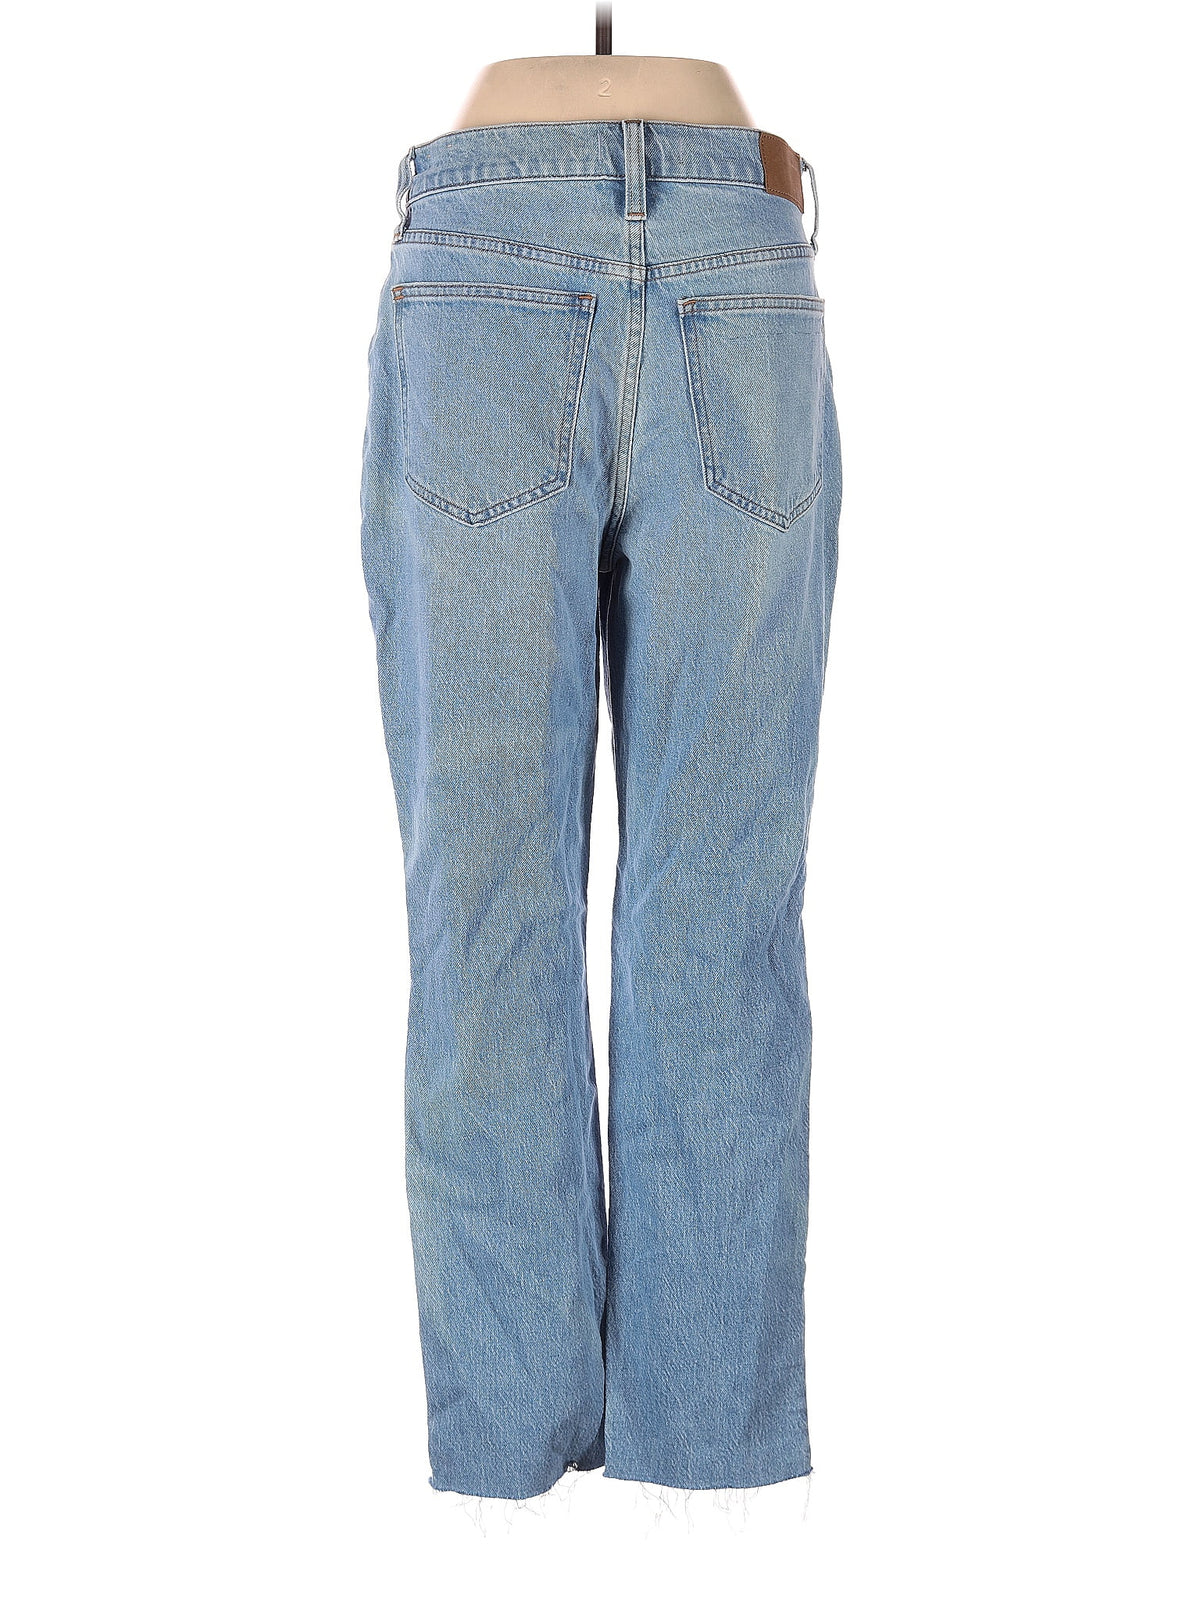 Low-Rise Wide-leg Jeans in Light Wash waist size - 27